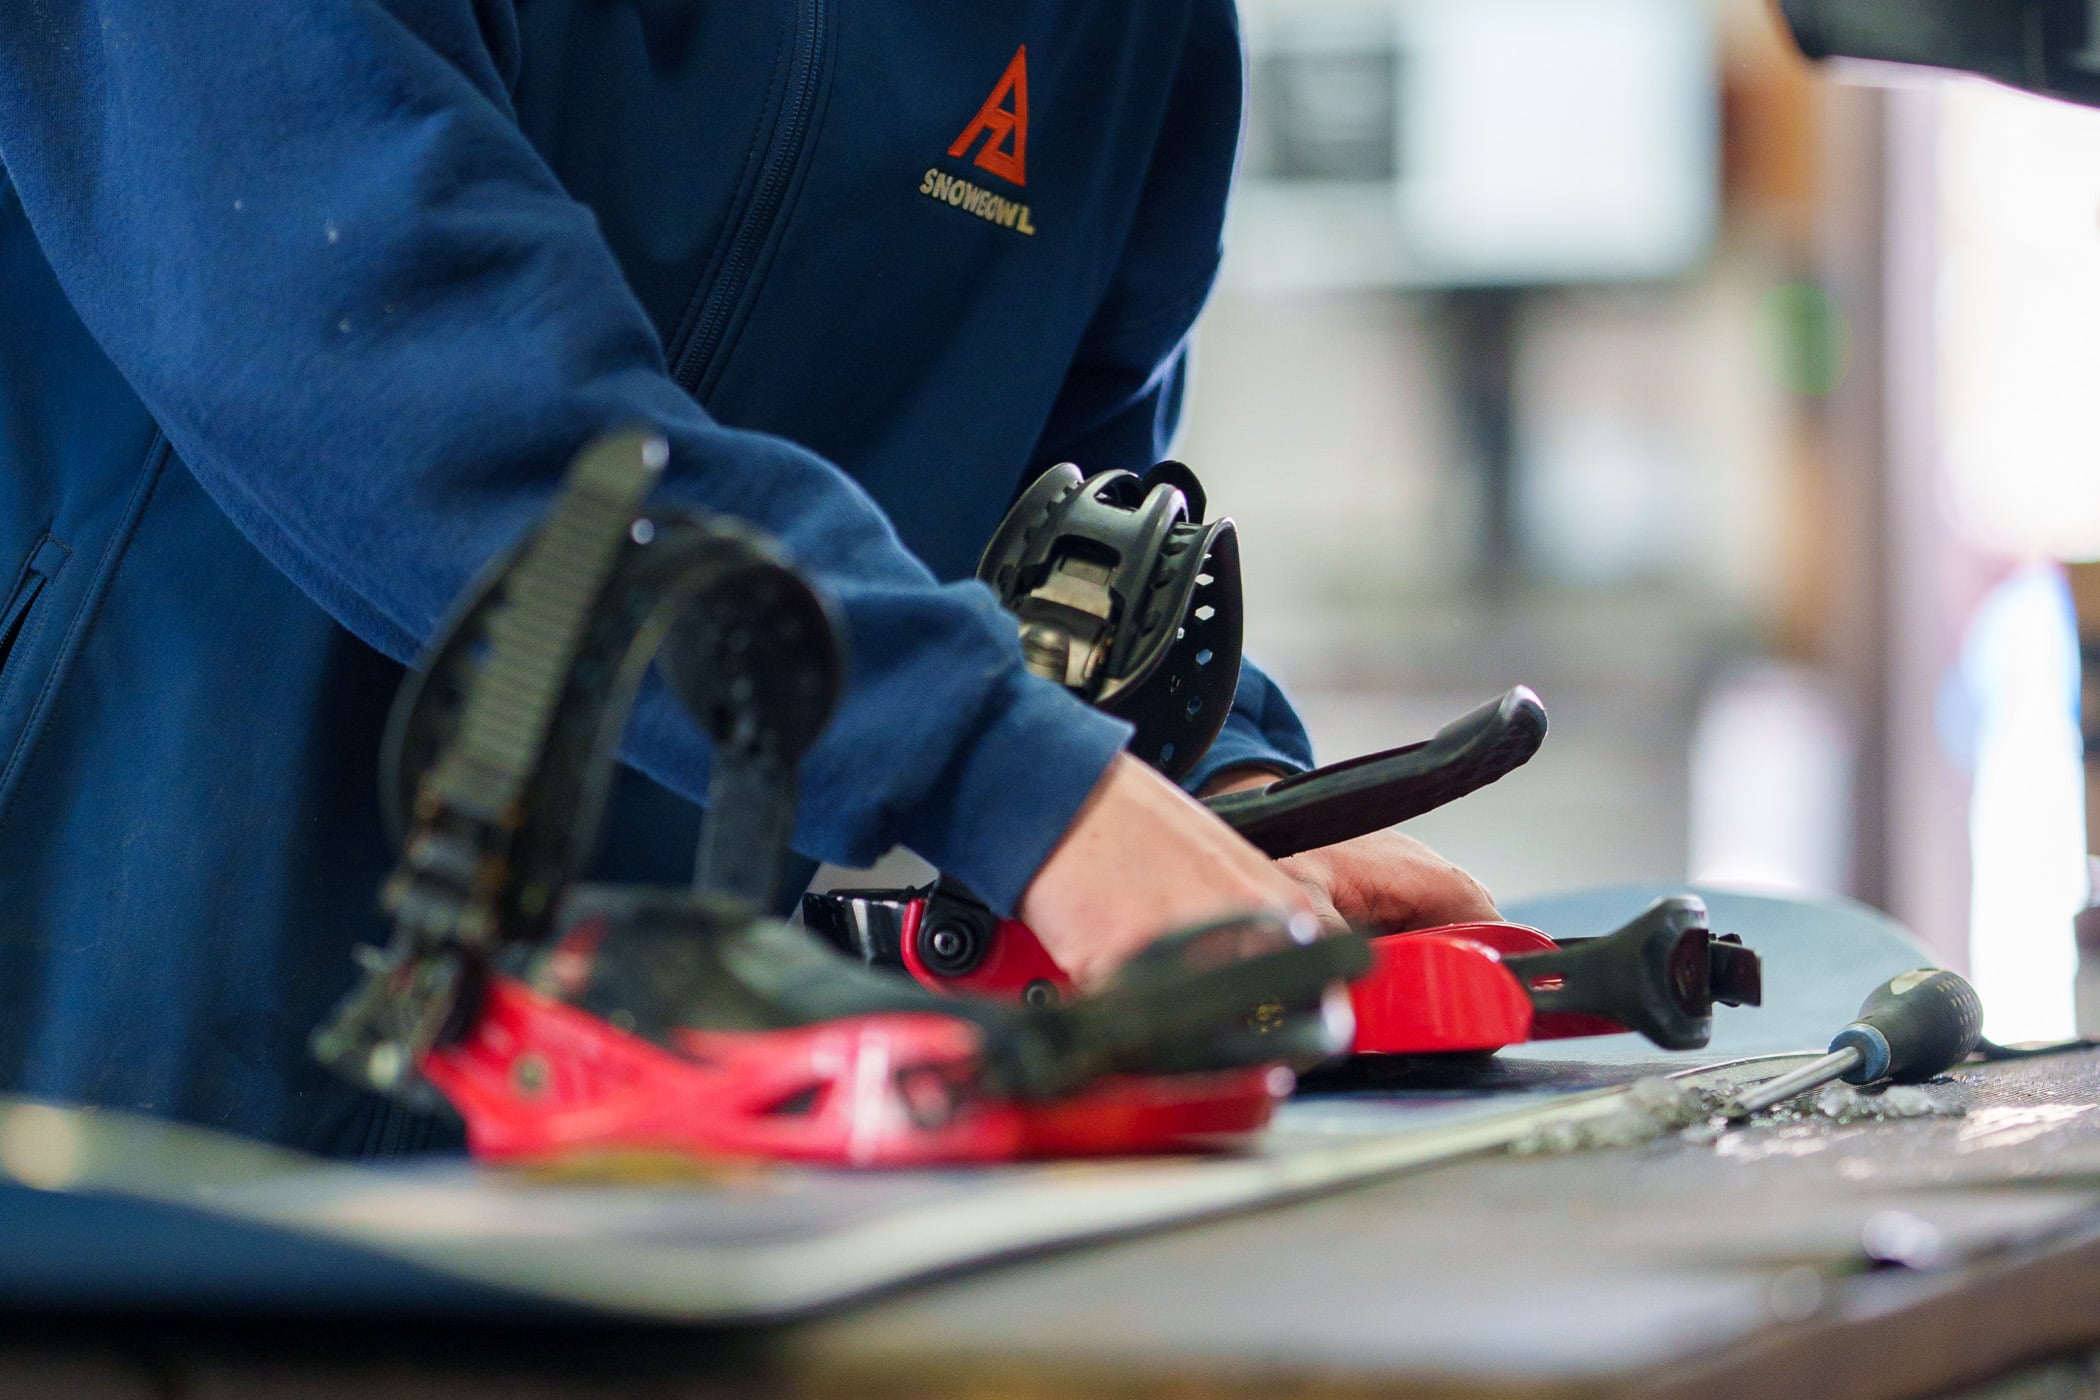 A Snowbowl employee adjusting bindings on a rental snowboard